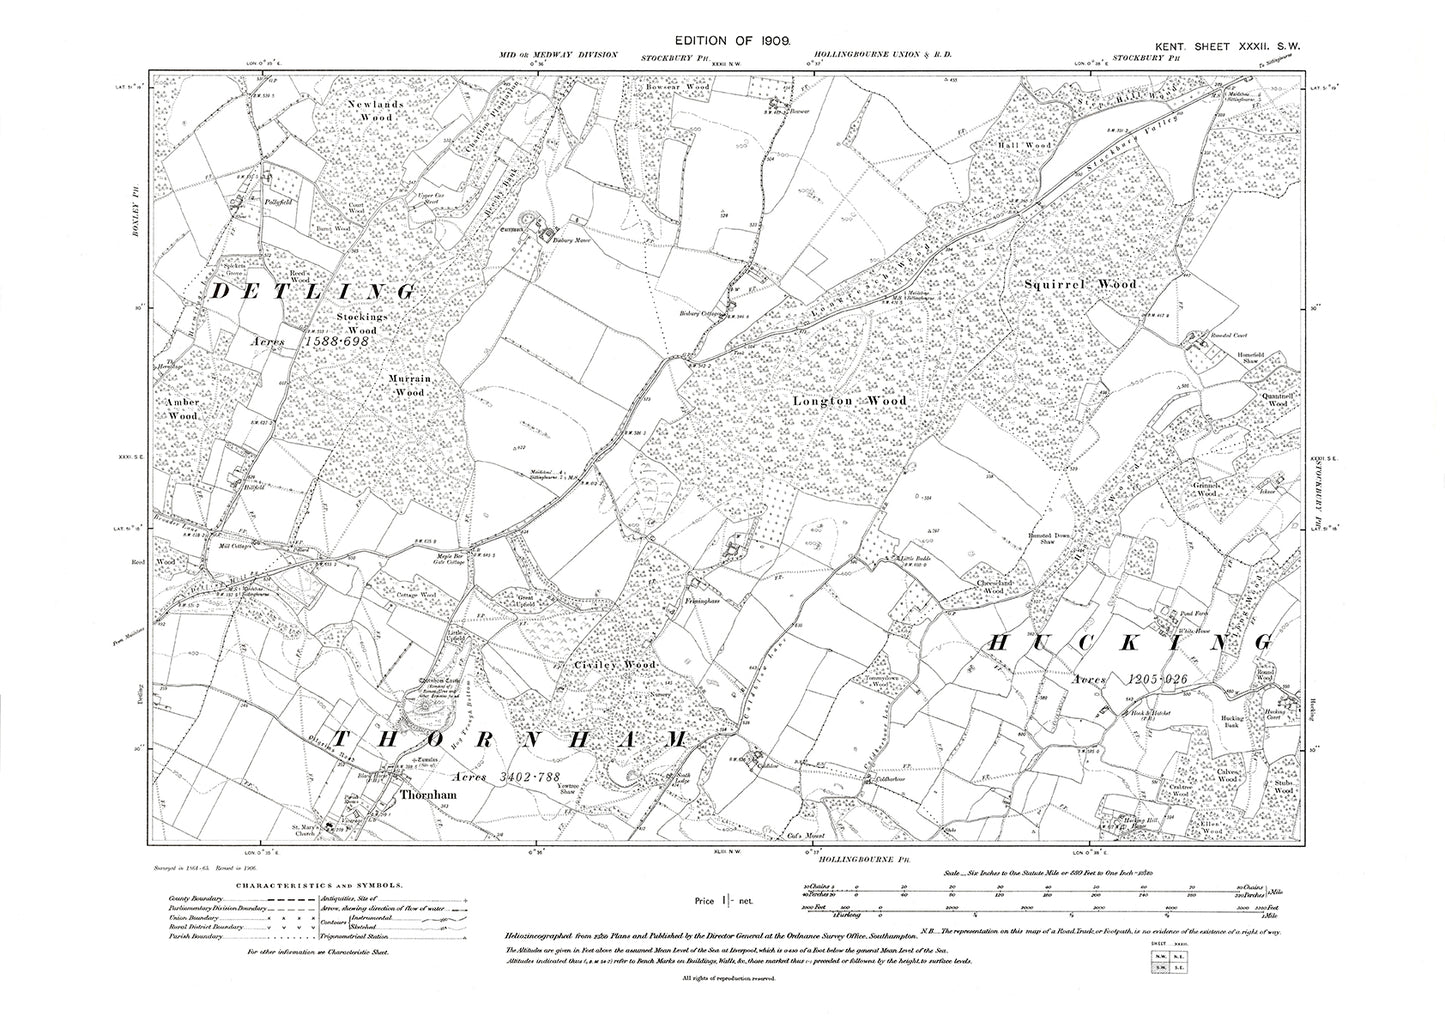 Thurnham (Thornham), Hucking, old map Kent 1909: 32SW